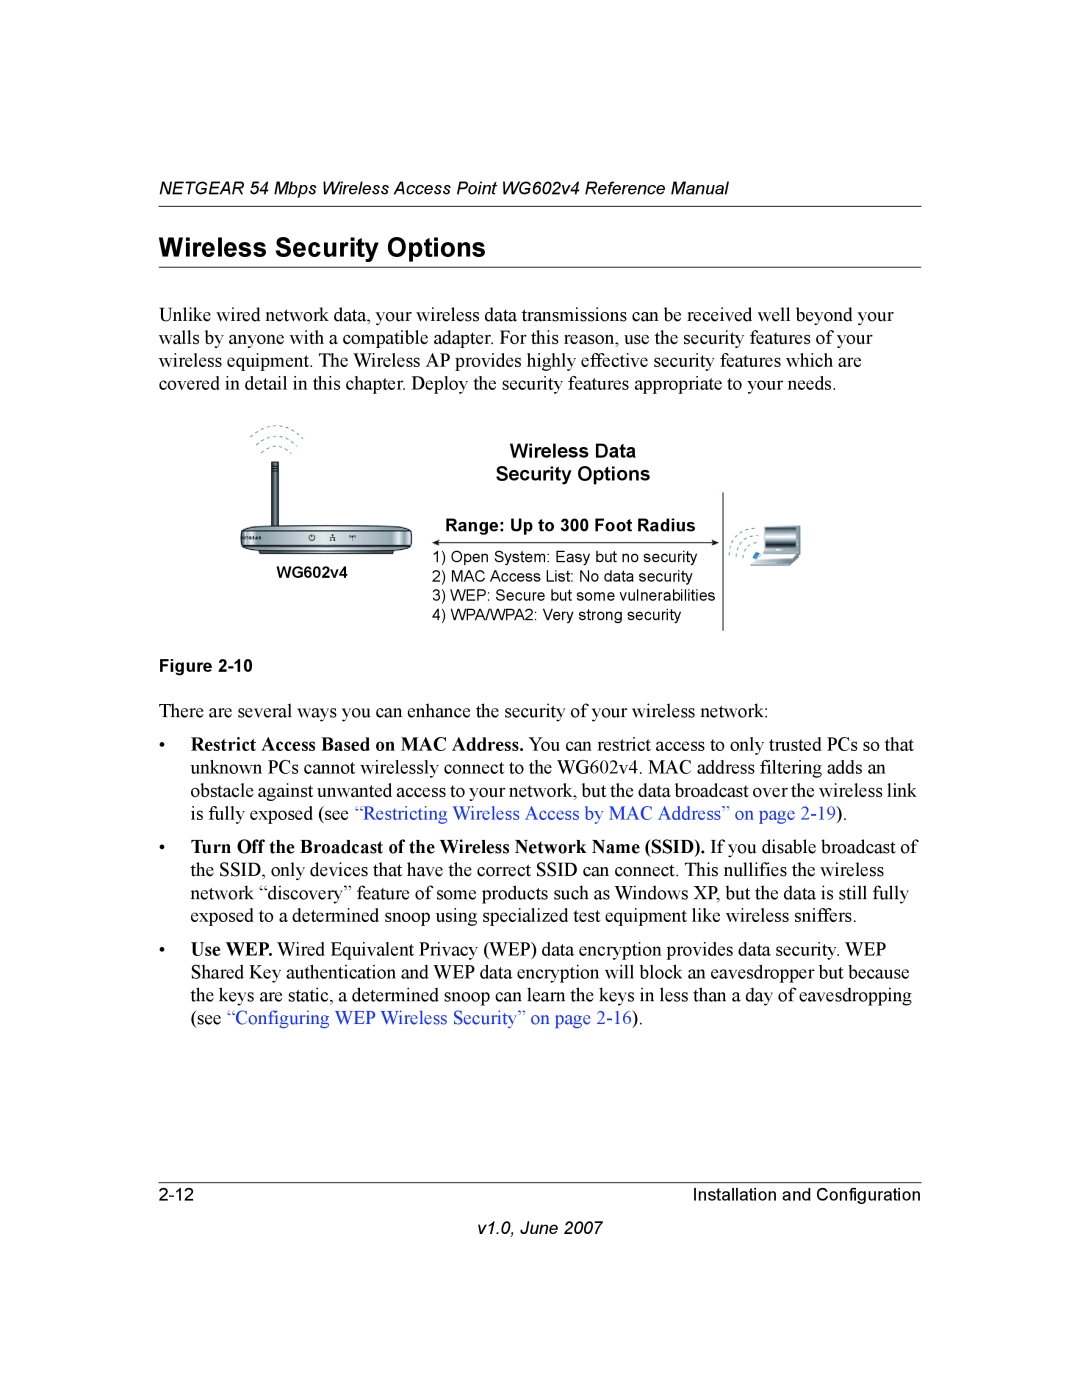 NETGEAR WG602V4 manual Wireless Security Options, Wireless Data 